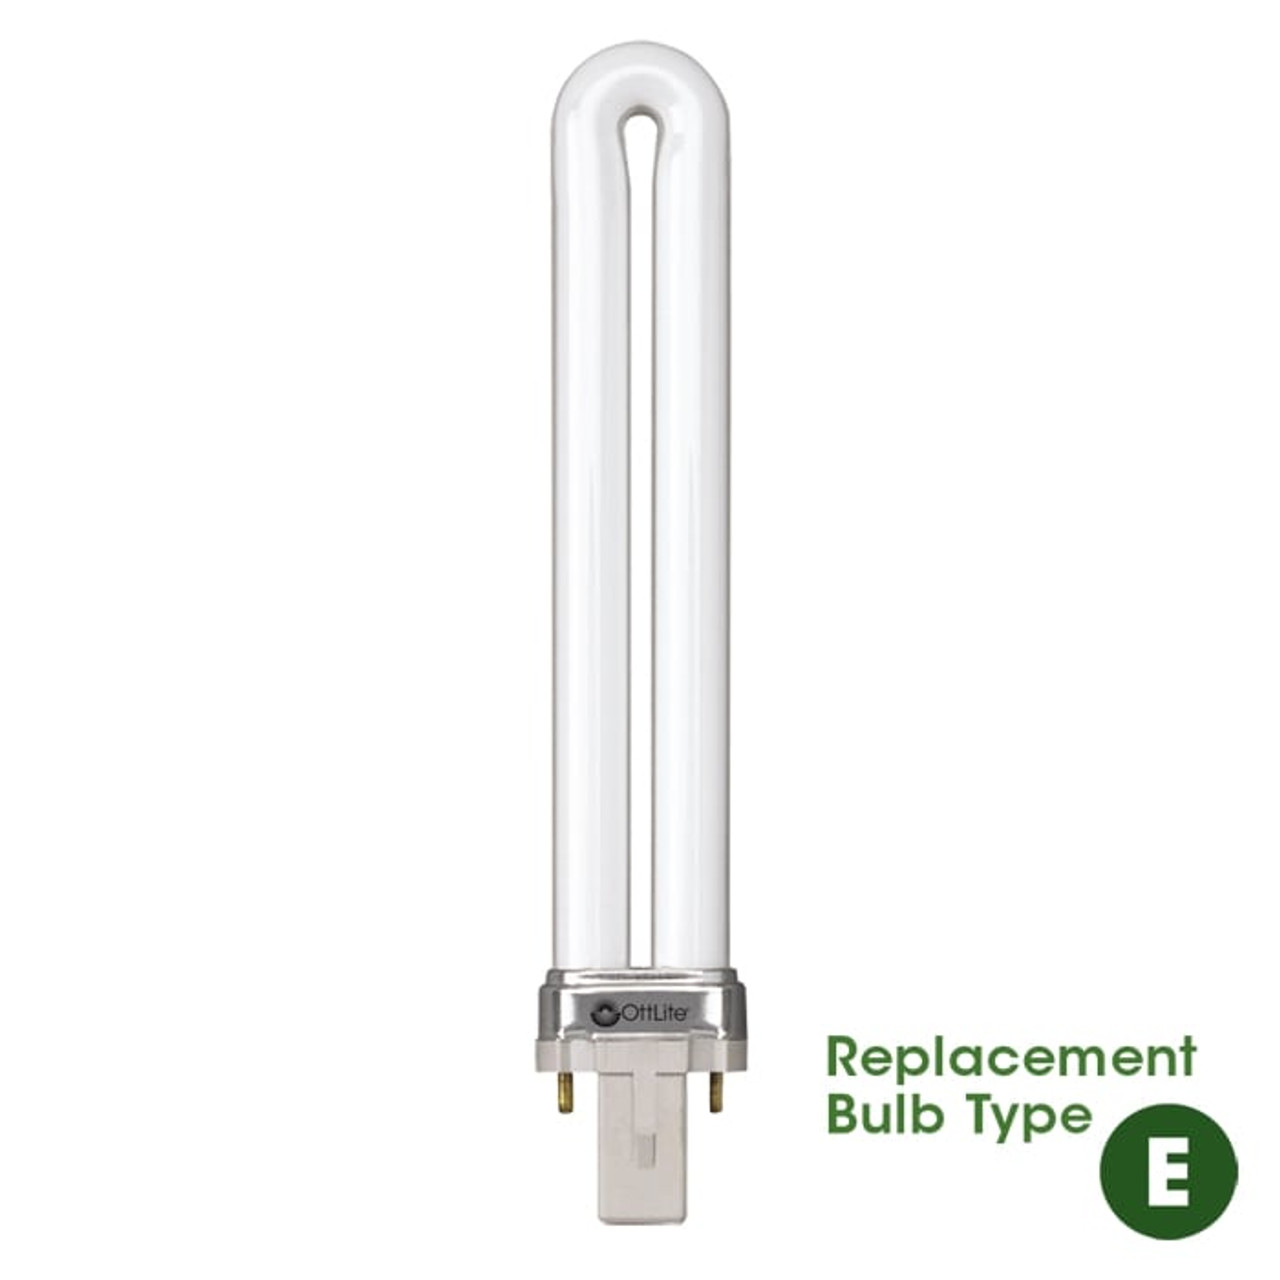 OTTLITE T1333E 13w Replacement Bulb - Electronic Ballast TYPE E